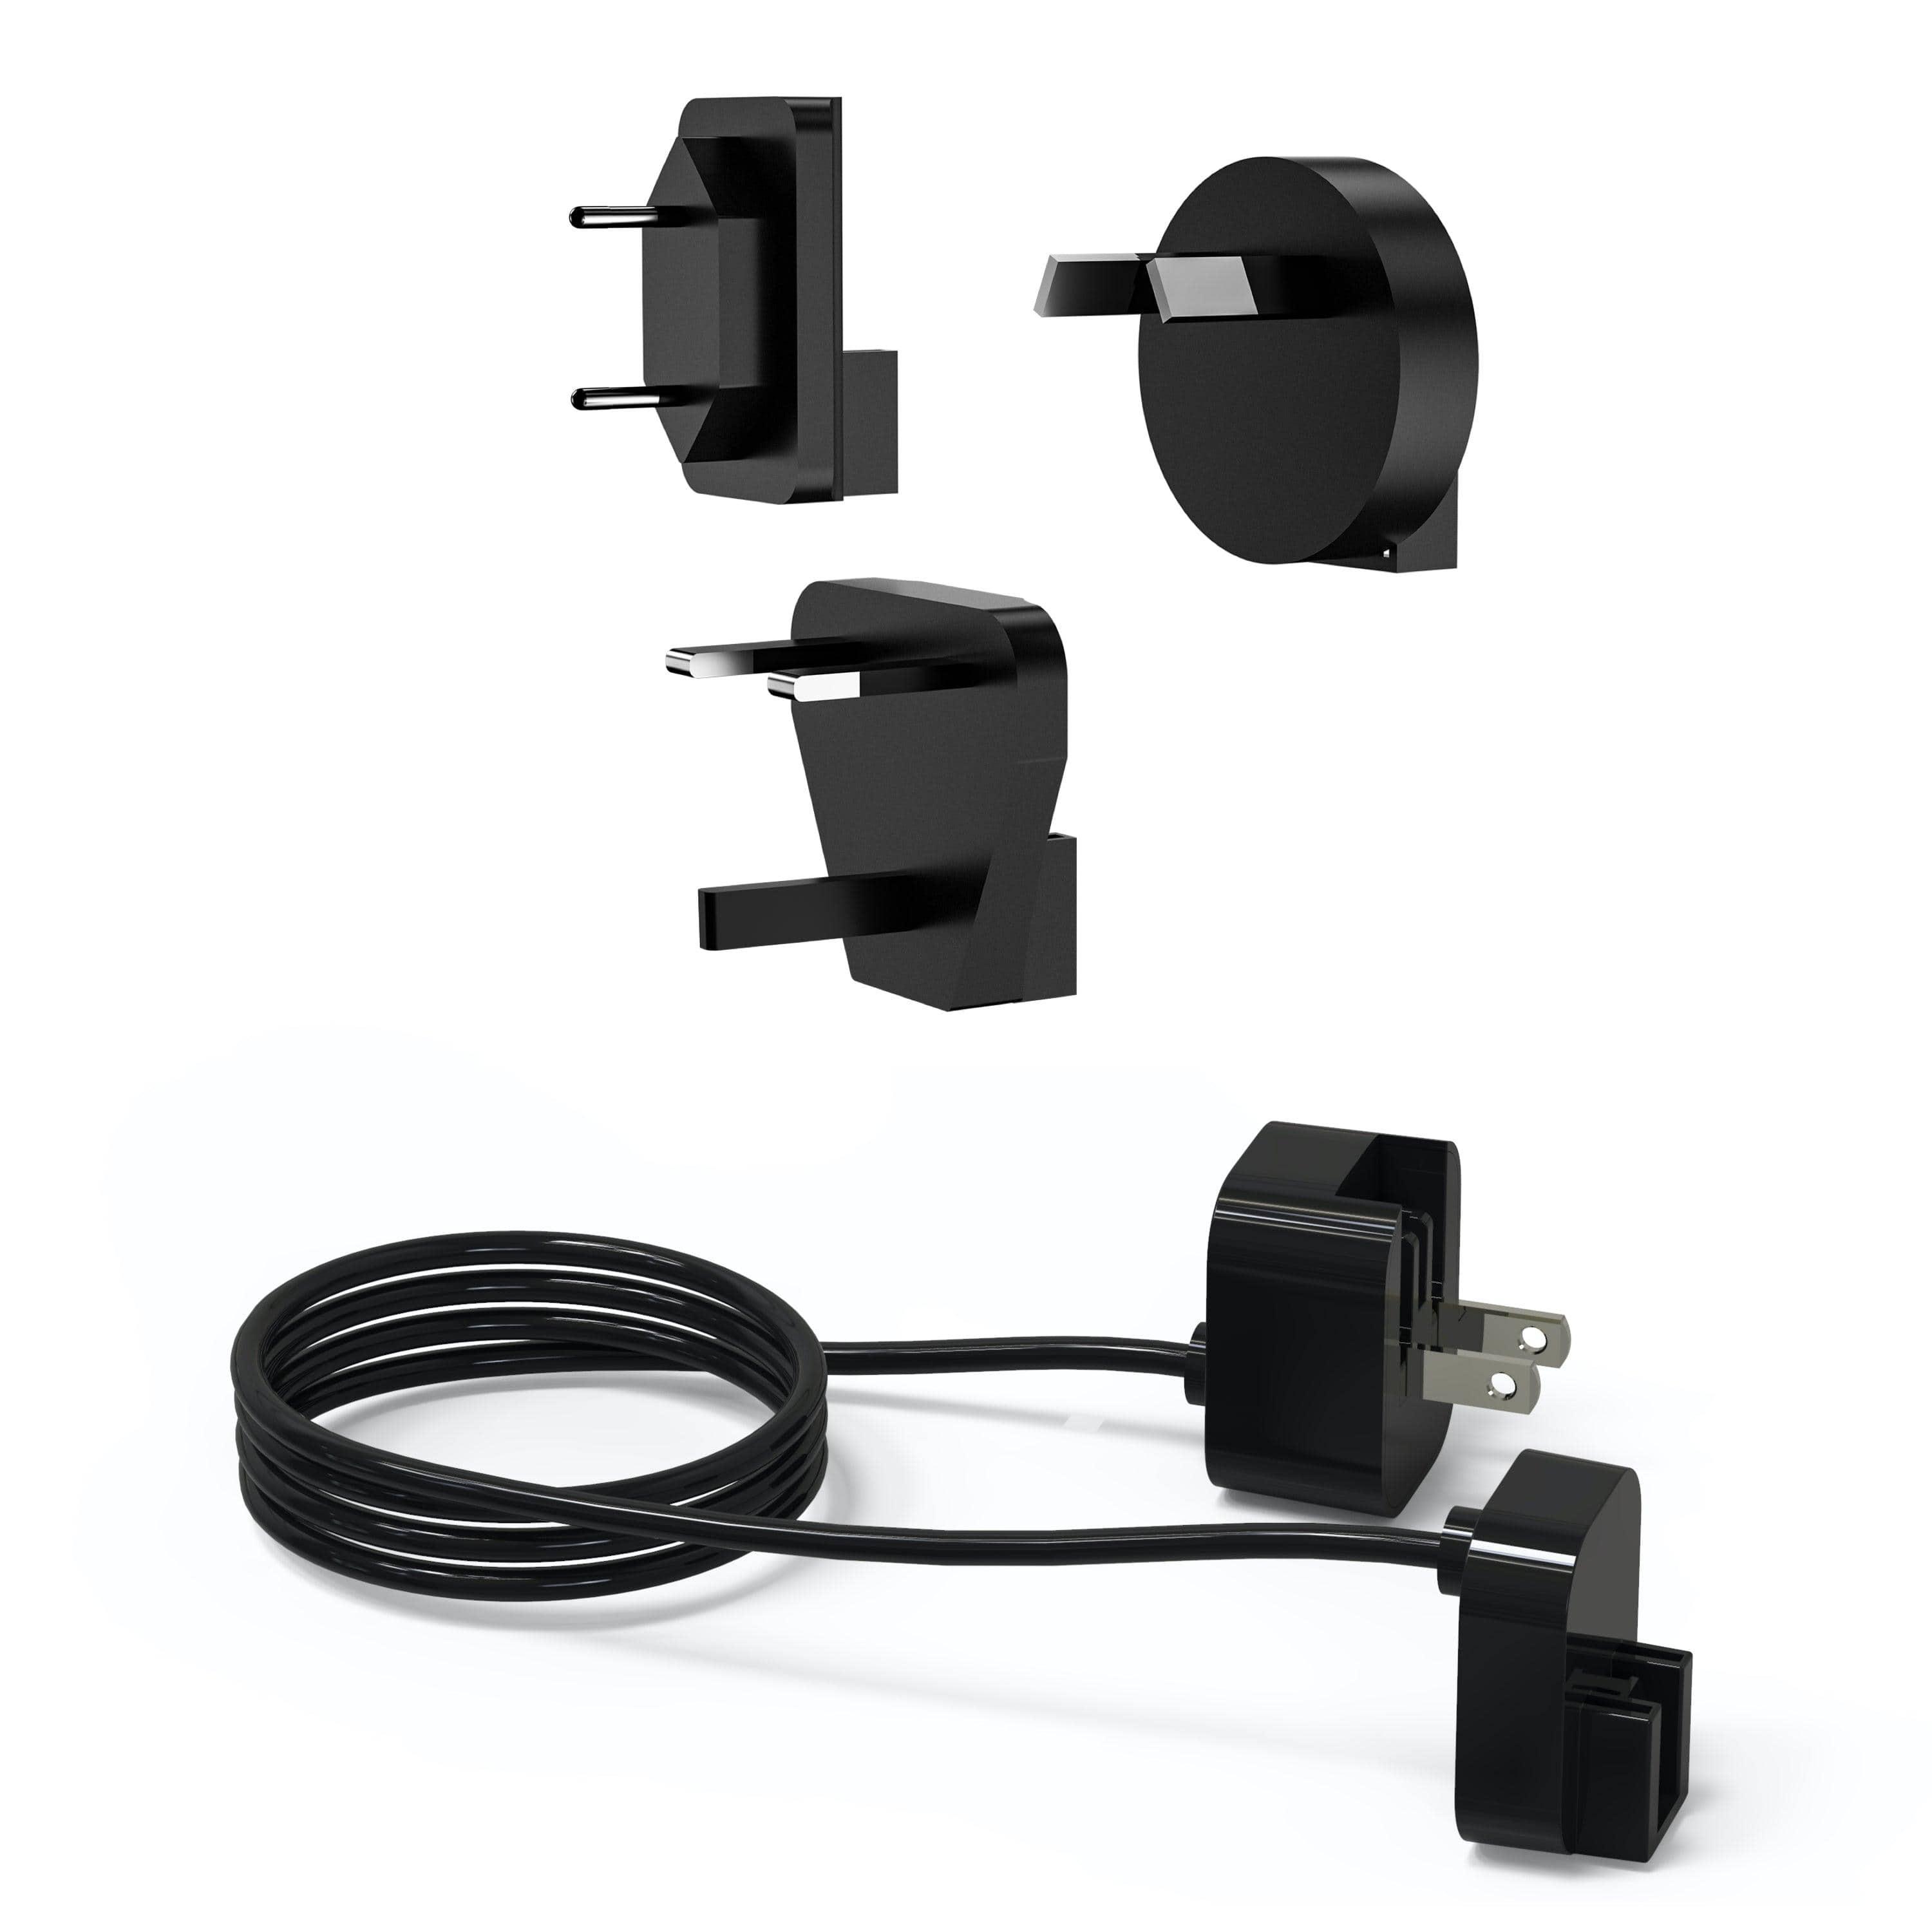 INVZI Power Adapter & Charger Accessories Black UK/EU/AU Travel Adapters + Extension Cord 6.6ft/2m INVZI International Universal Travel Adapter UK/EU/AU